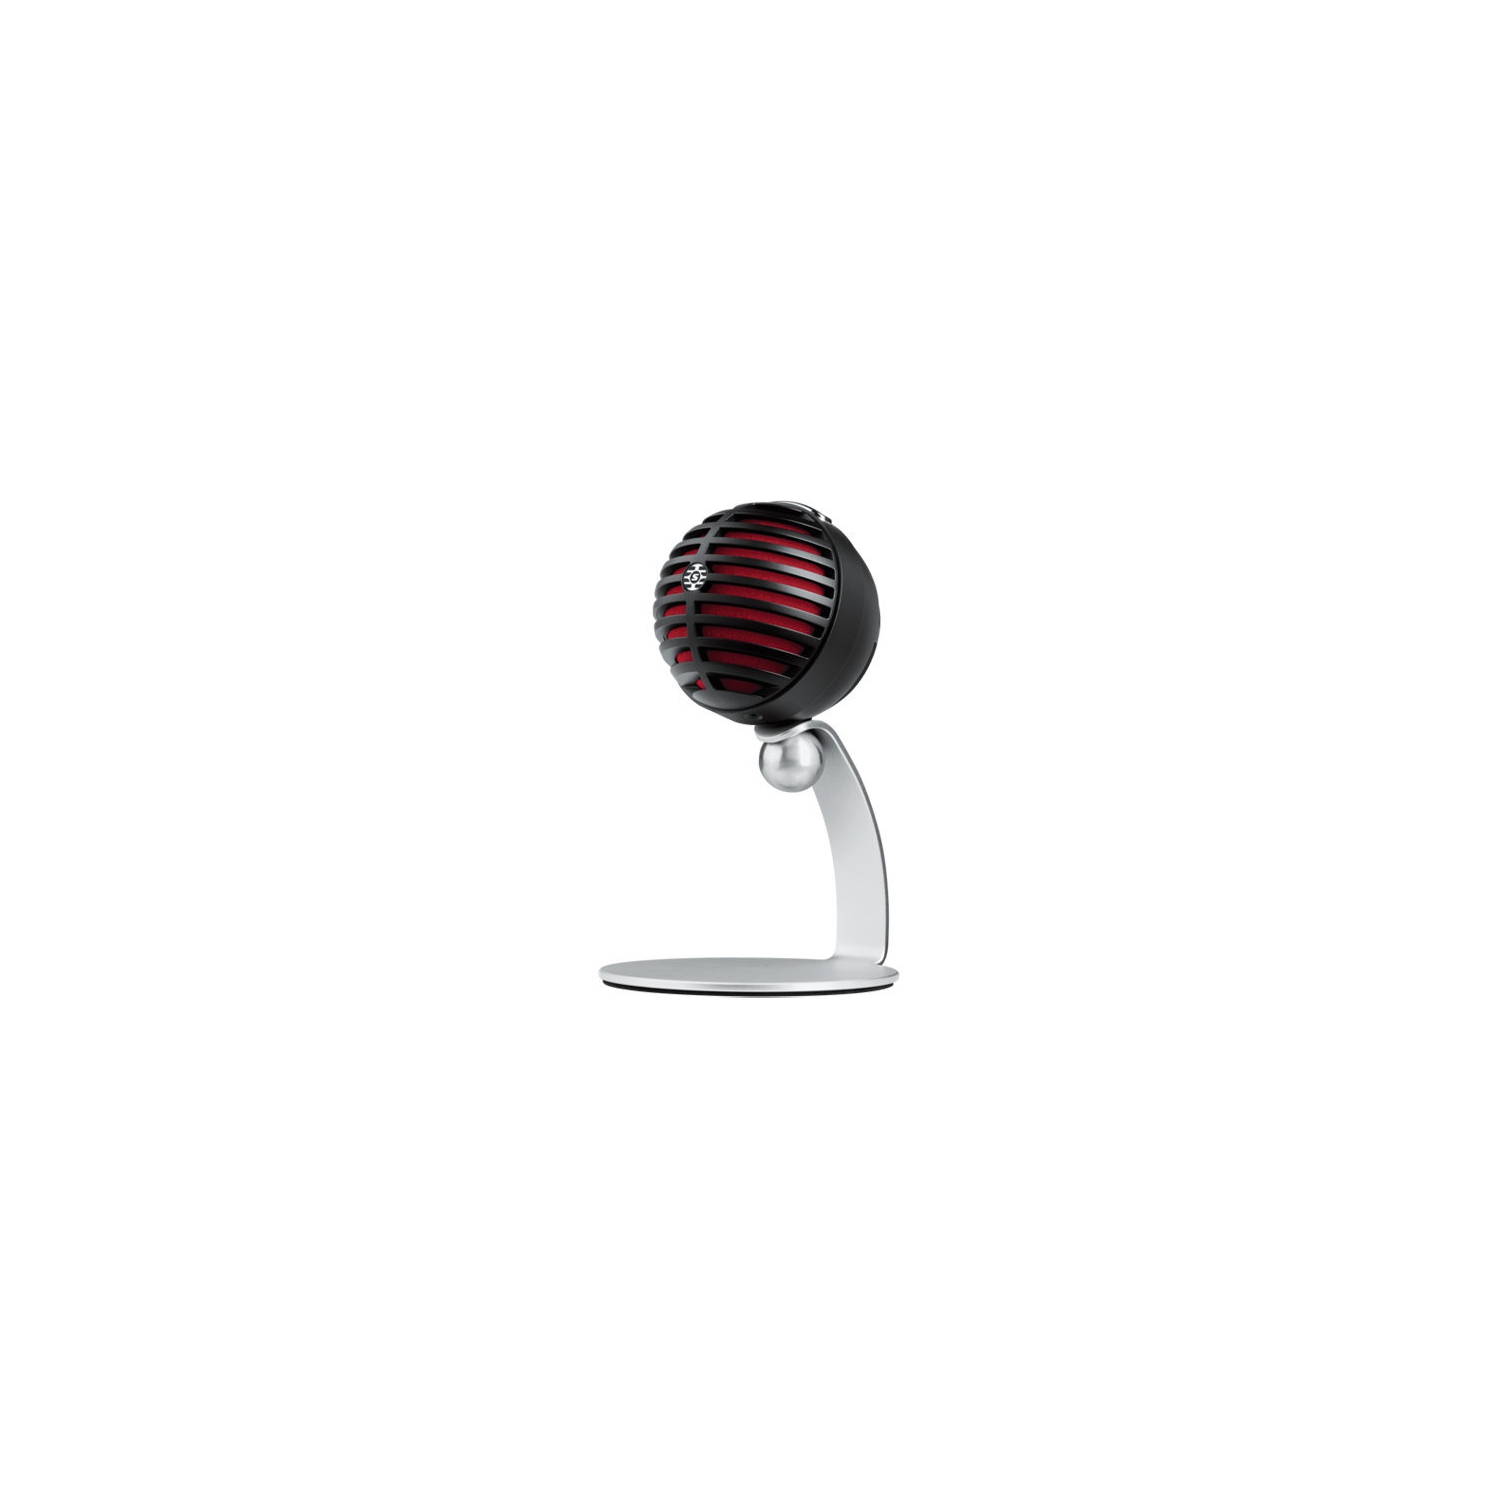 Shure MV5-DIG Digital Condenser Microphone - Black | Best Buy Canada